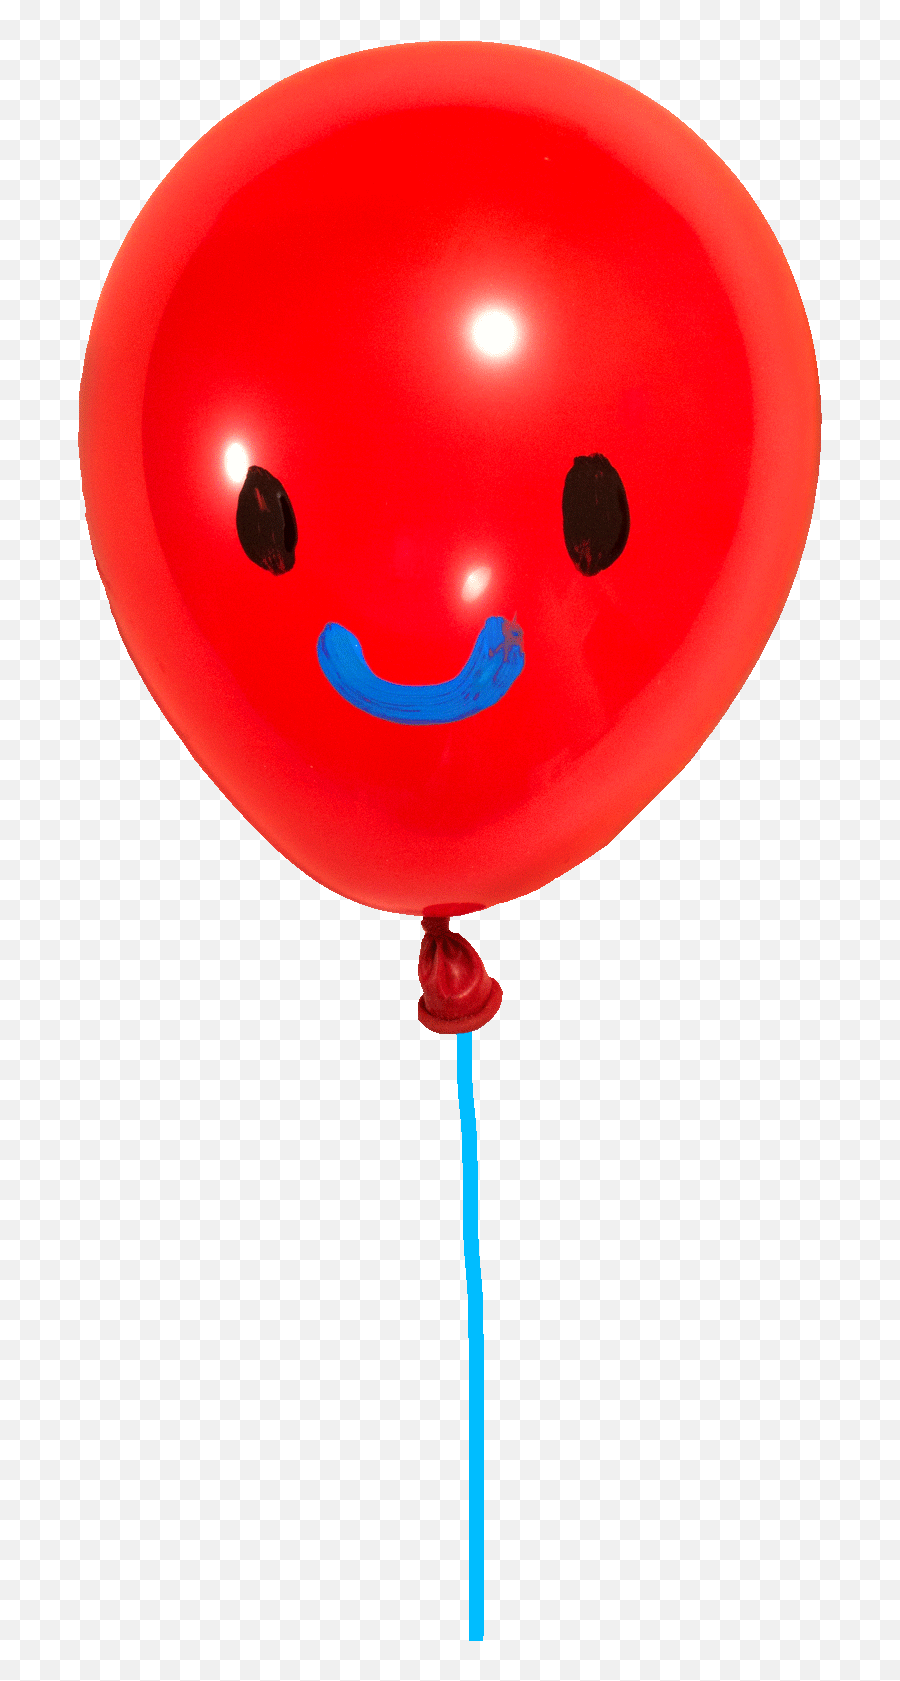 Climate Change Hoax Exposed - Sad Deflating Balloon Gif Emoji,Head Banging Emoticon Gif